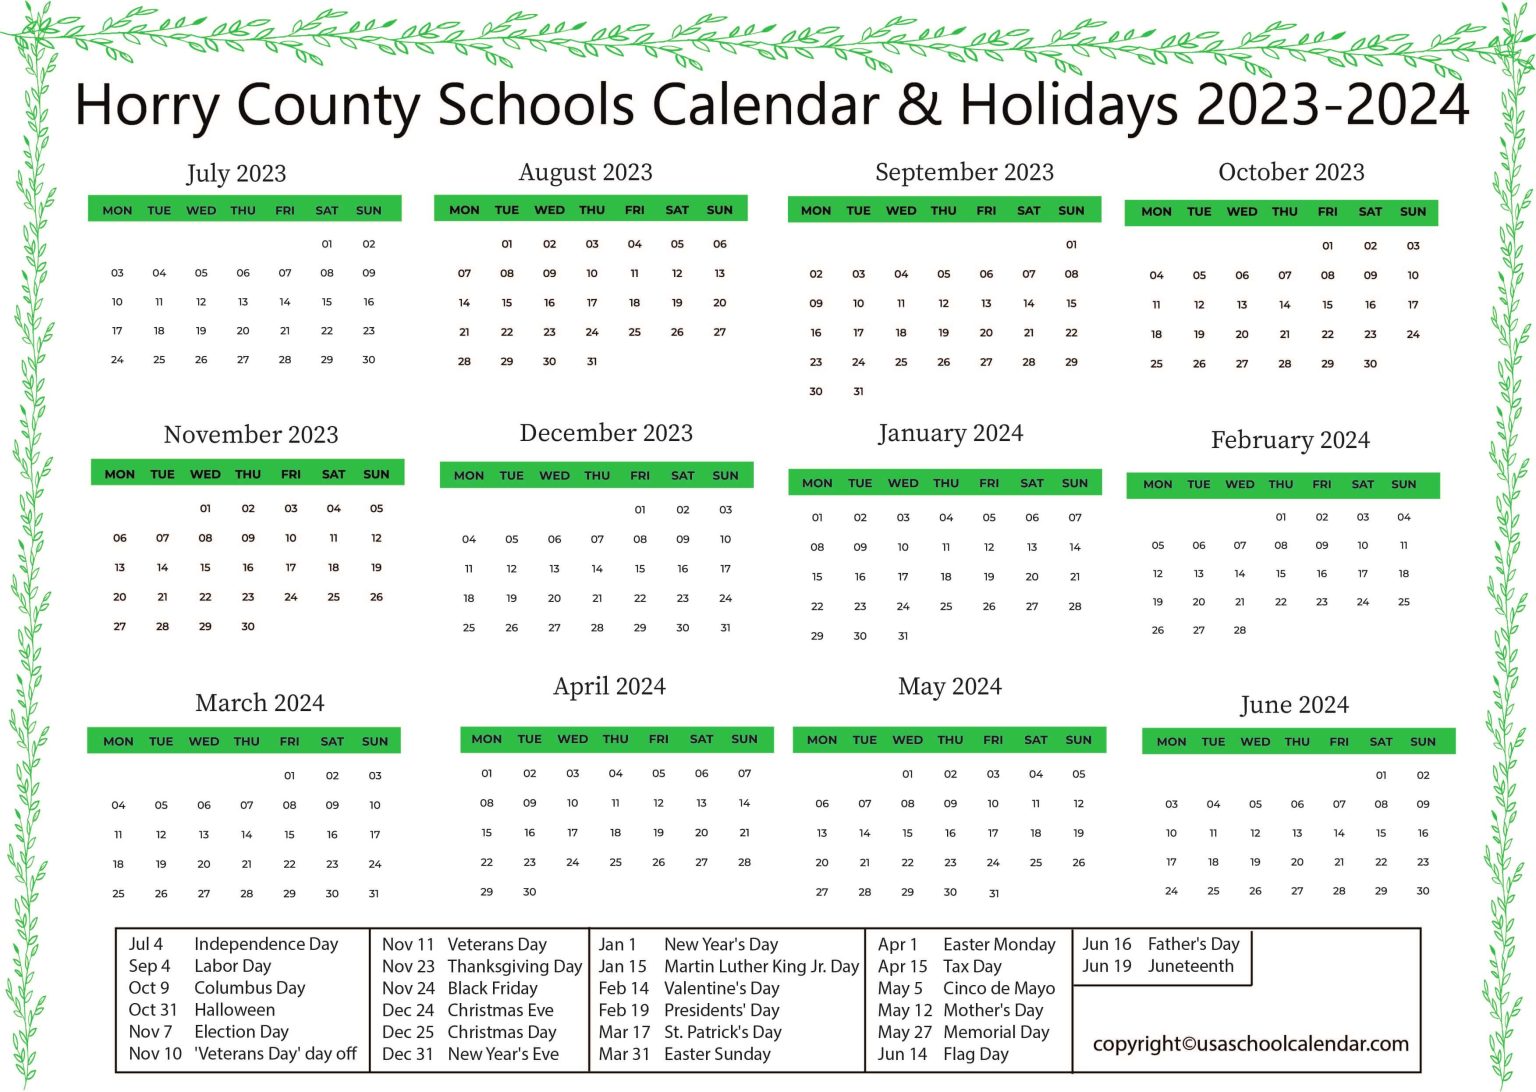 horry-county-schools-calendar-holidays-2023-2024